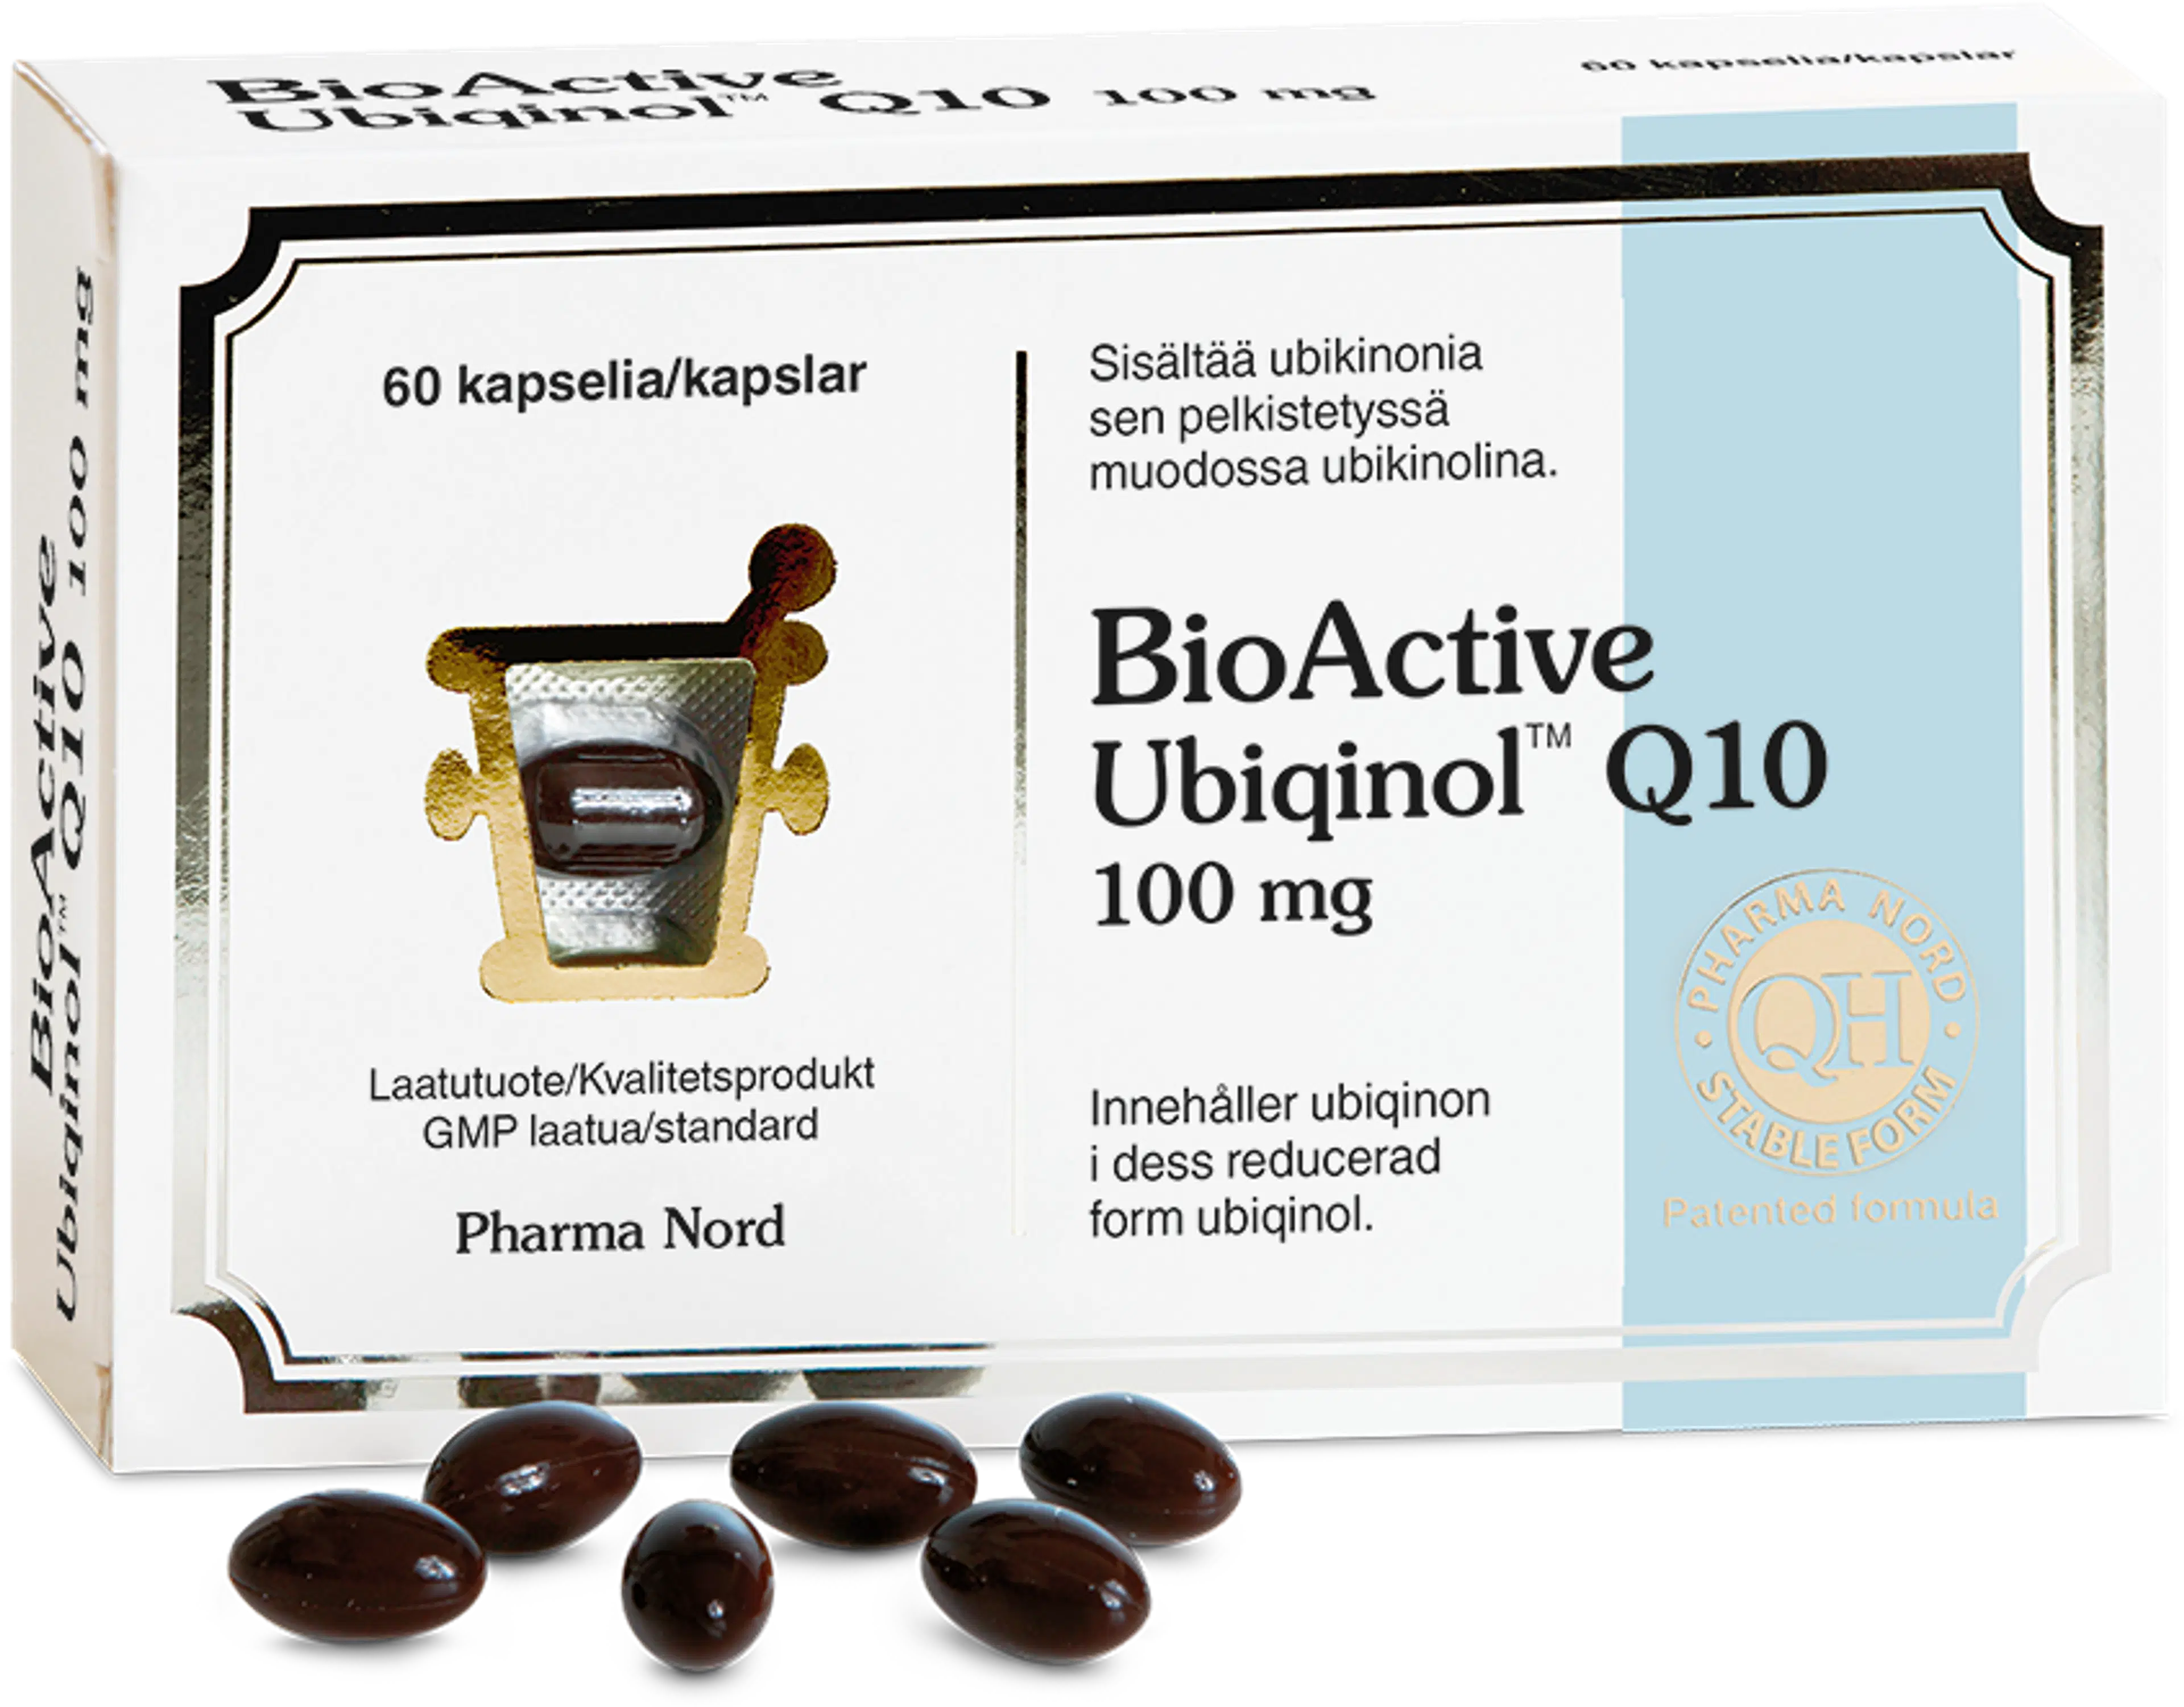 BioActive Ubiqinol™ Q10 100 mg ravintolisä 60 kaps.